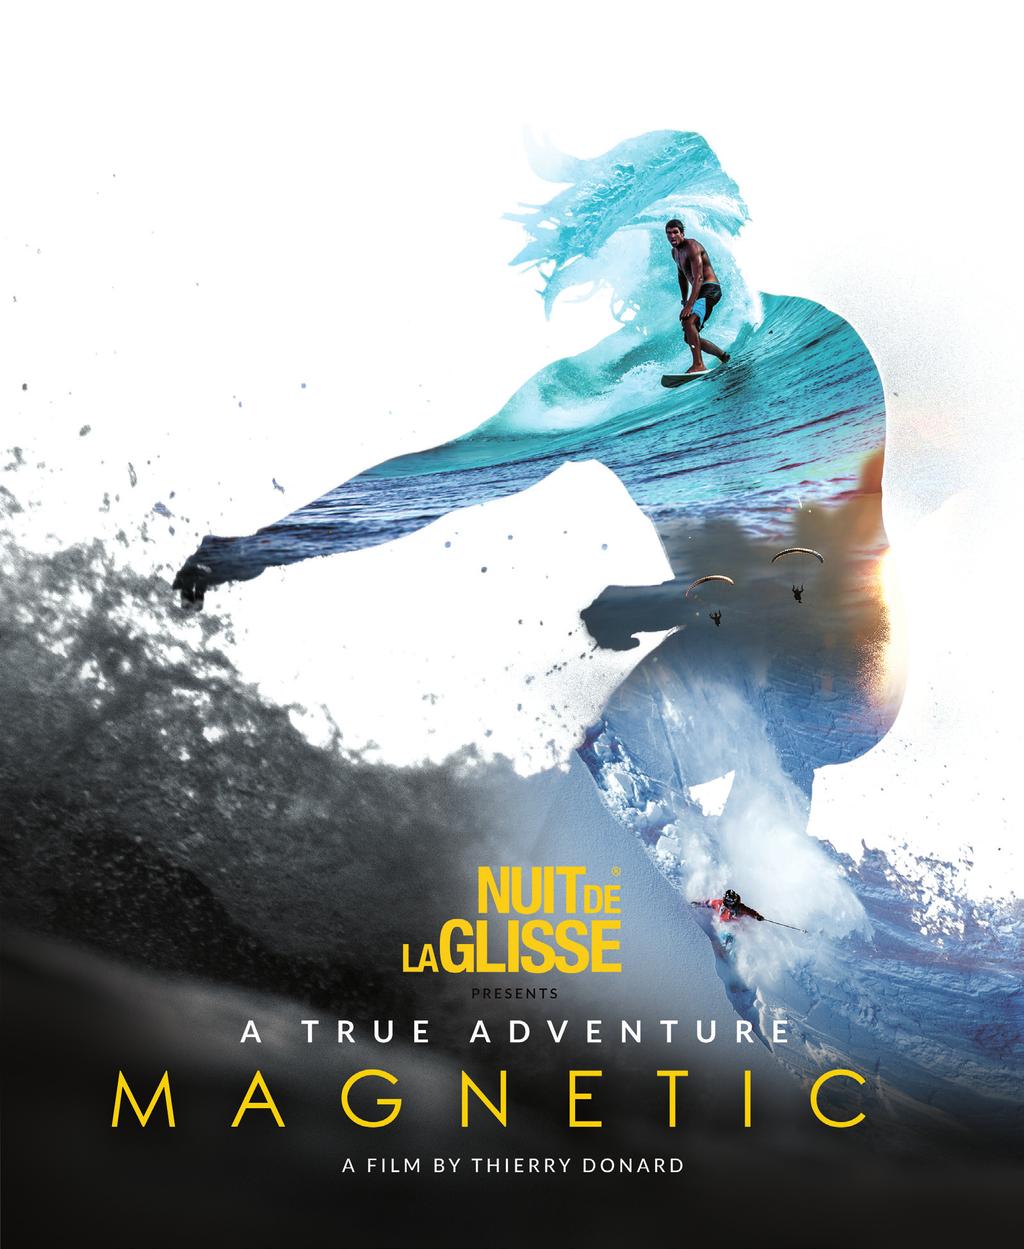 MAGNETIC CINEMA FEATURE FILM 115 min / 4K cinemascope MORE THAN AN EXTREME SPORTS FILM, A TRUE ADVENTURE The latest Nuit de la Glisse film.